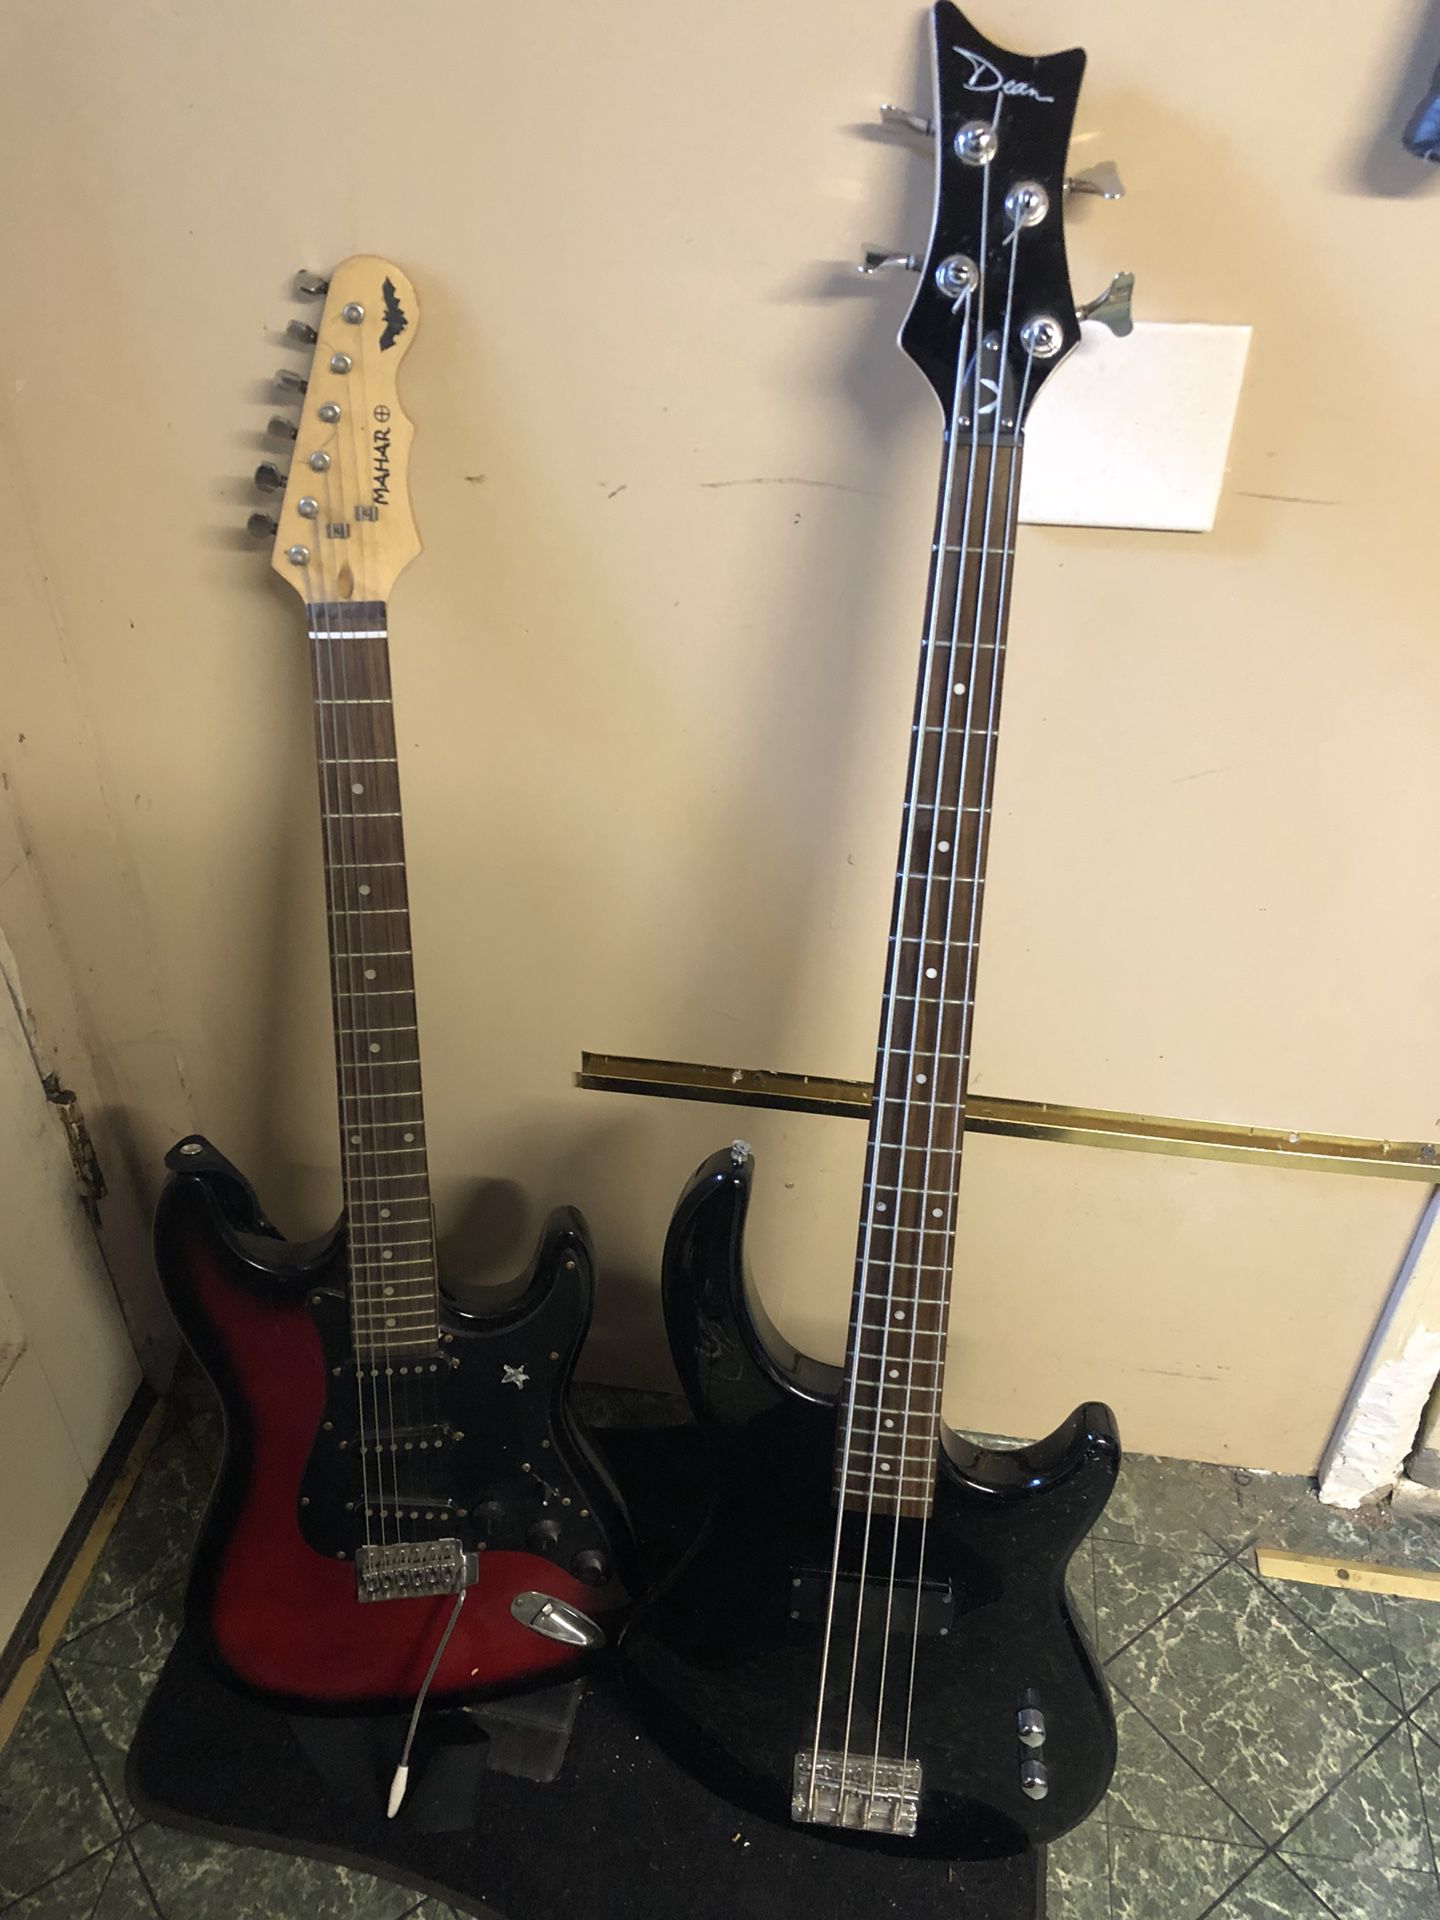 Guitar and dean bass